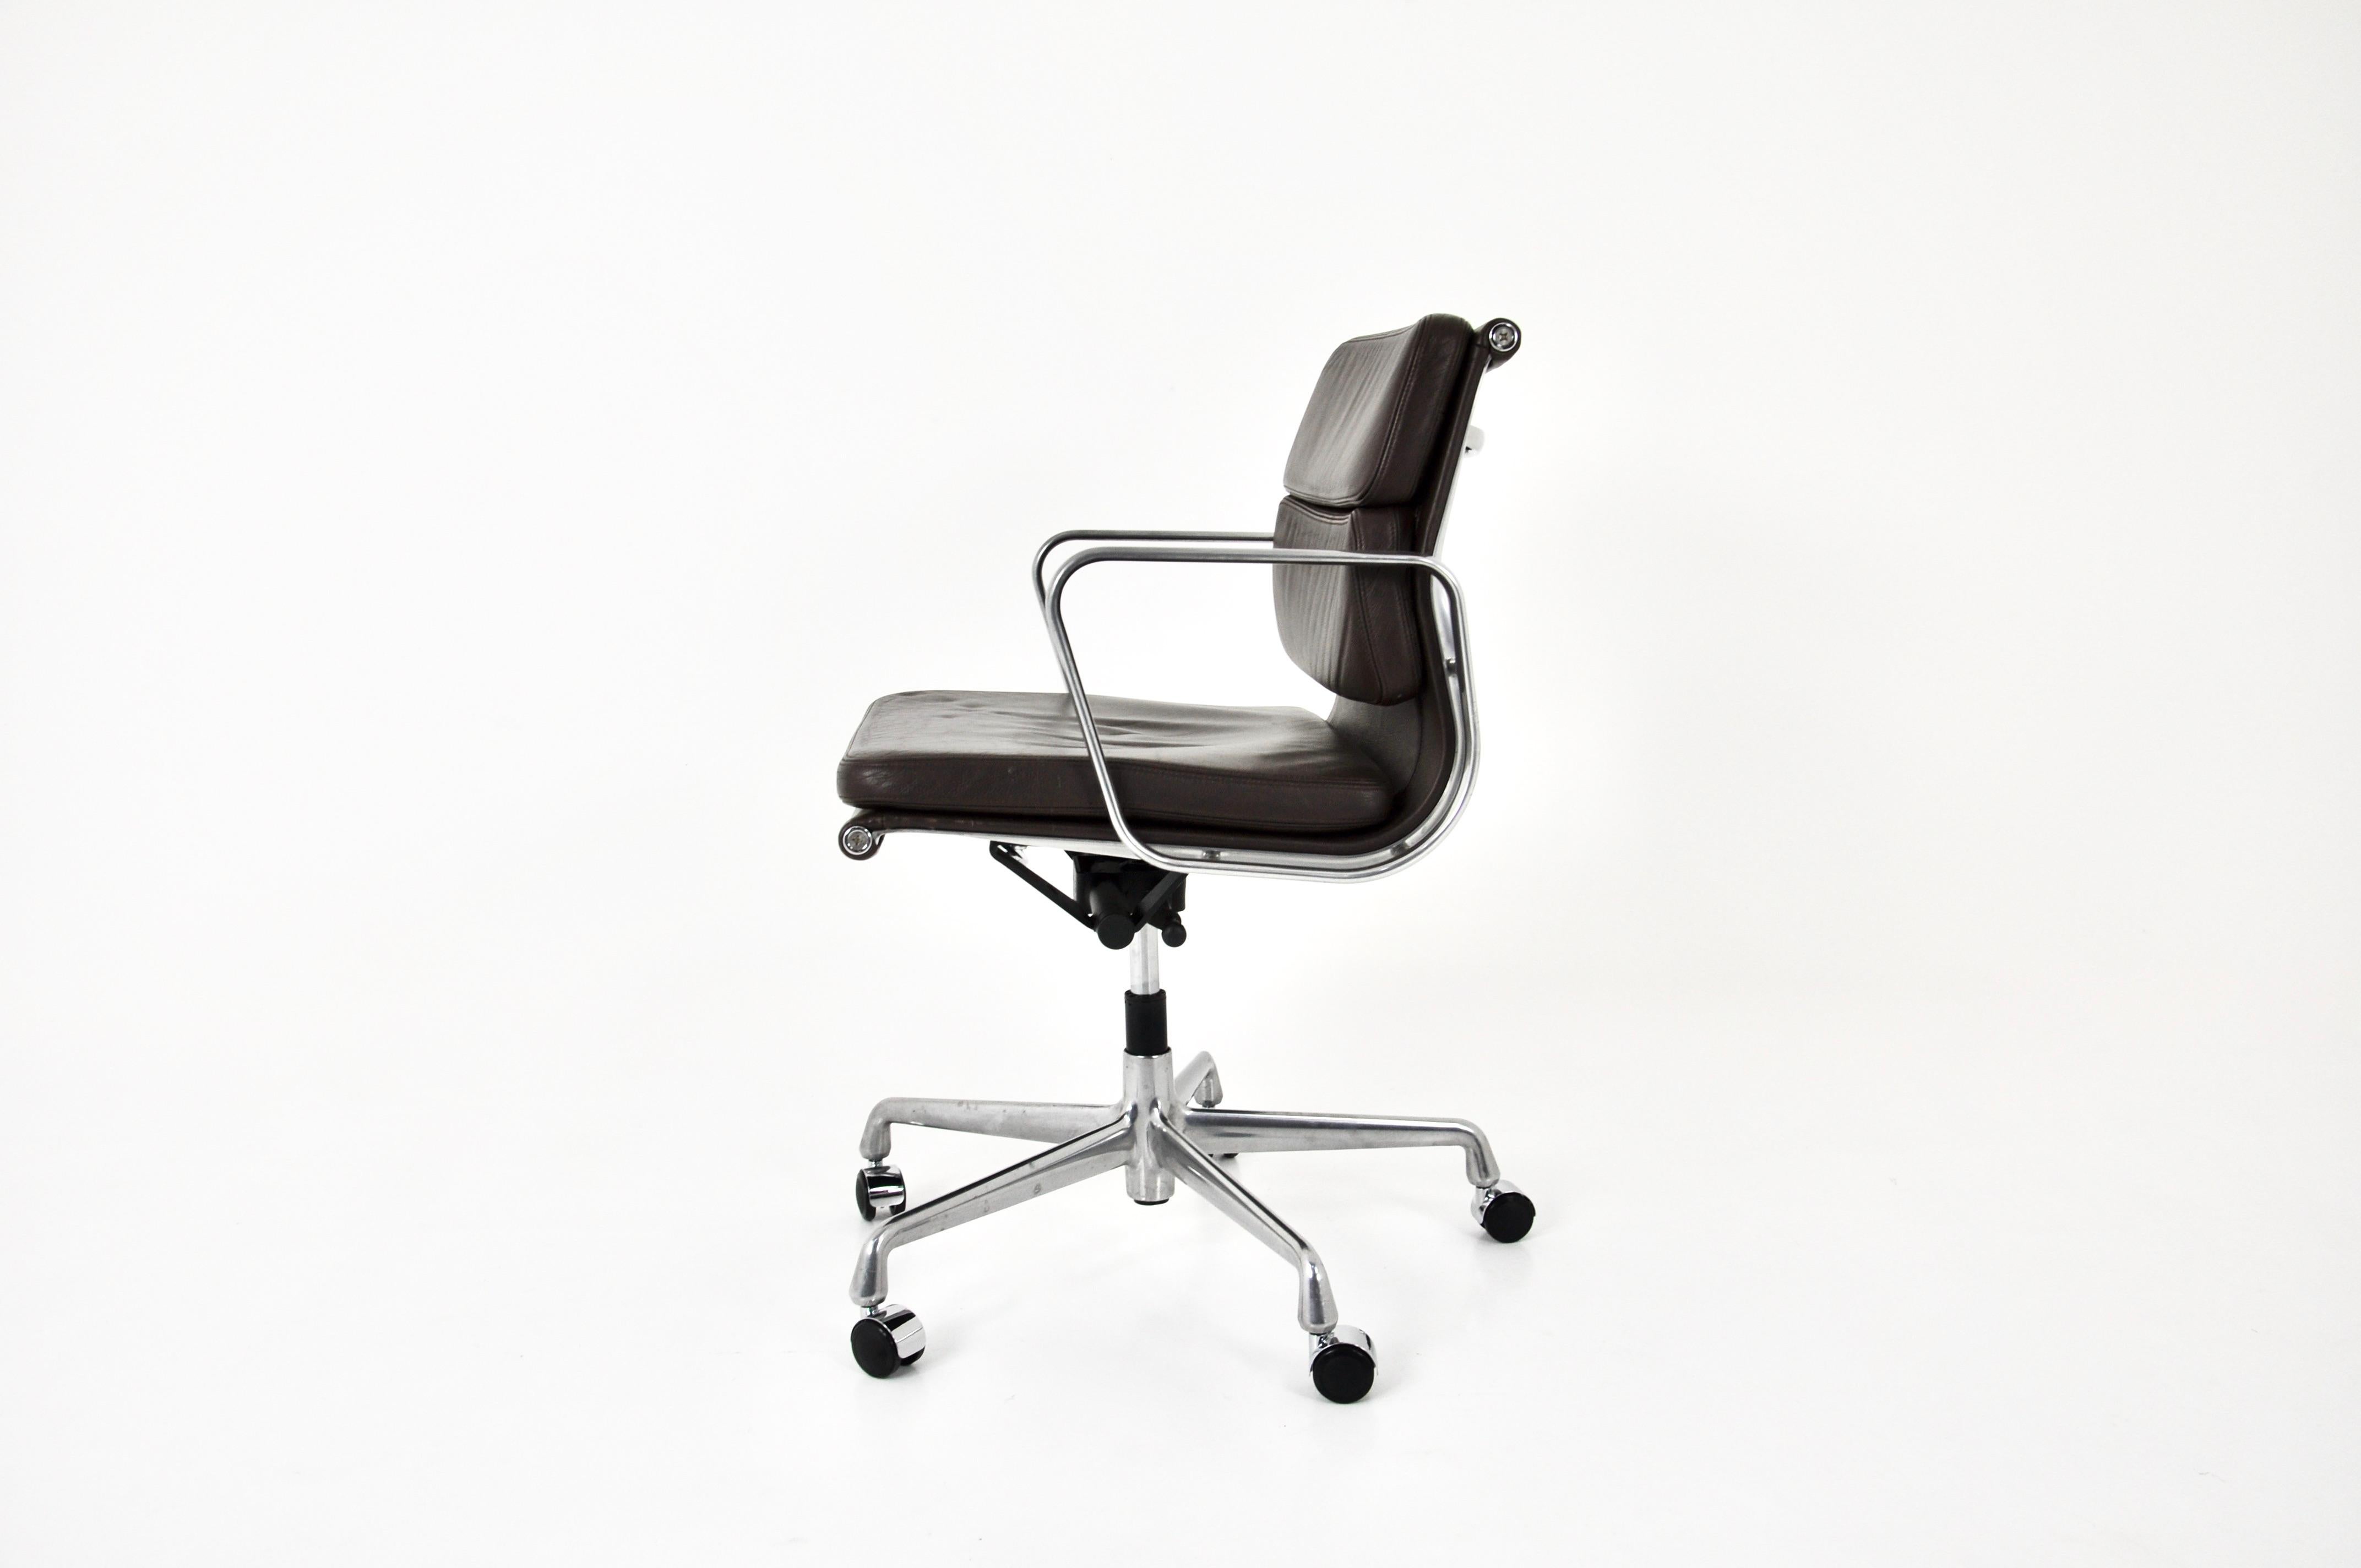 Brown Leather Soft Pad Chair von Charles & Ray Eames für Vitra, 1980er Jahre (Aluminium)